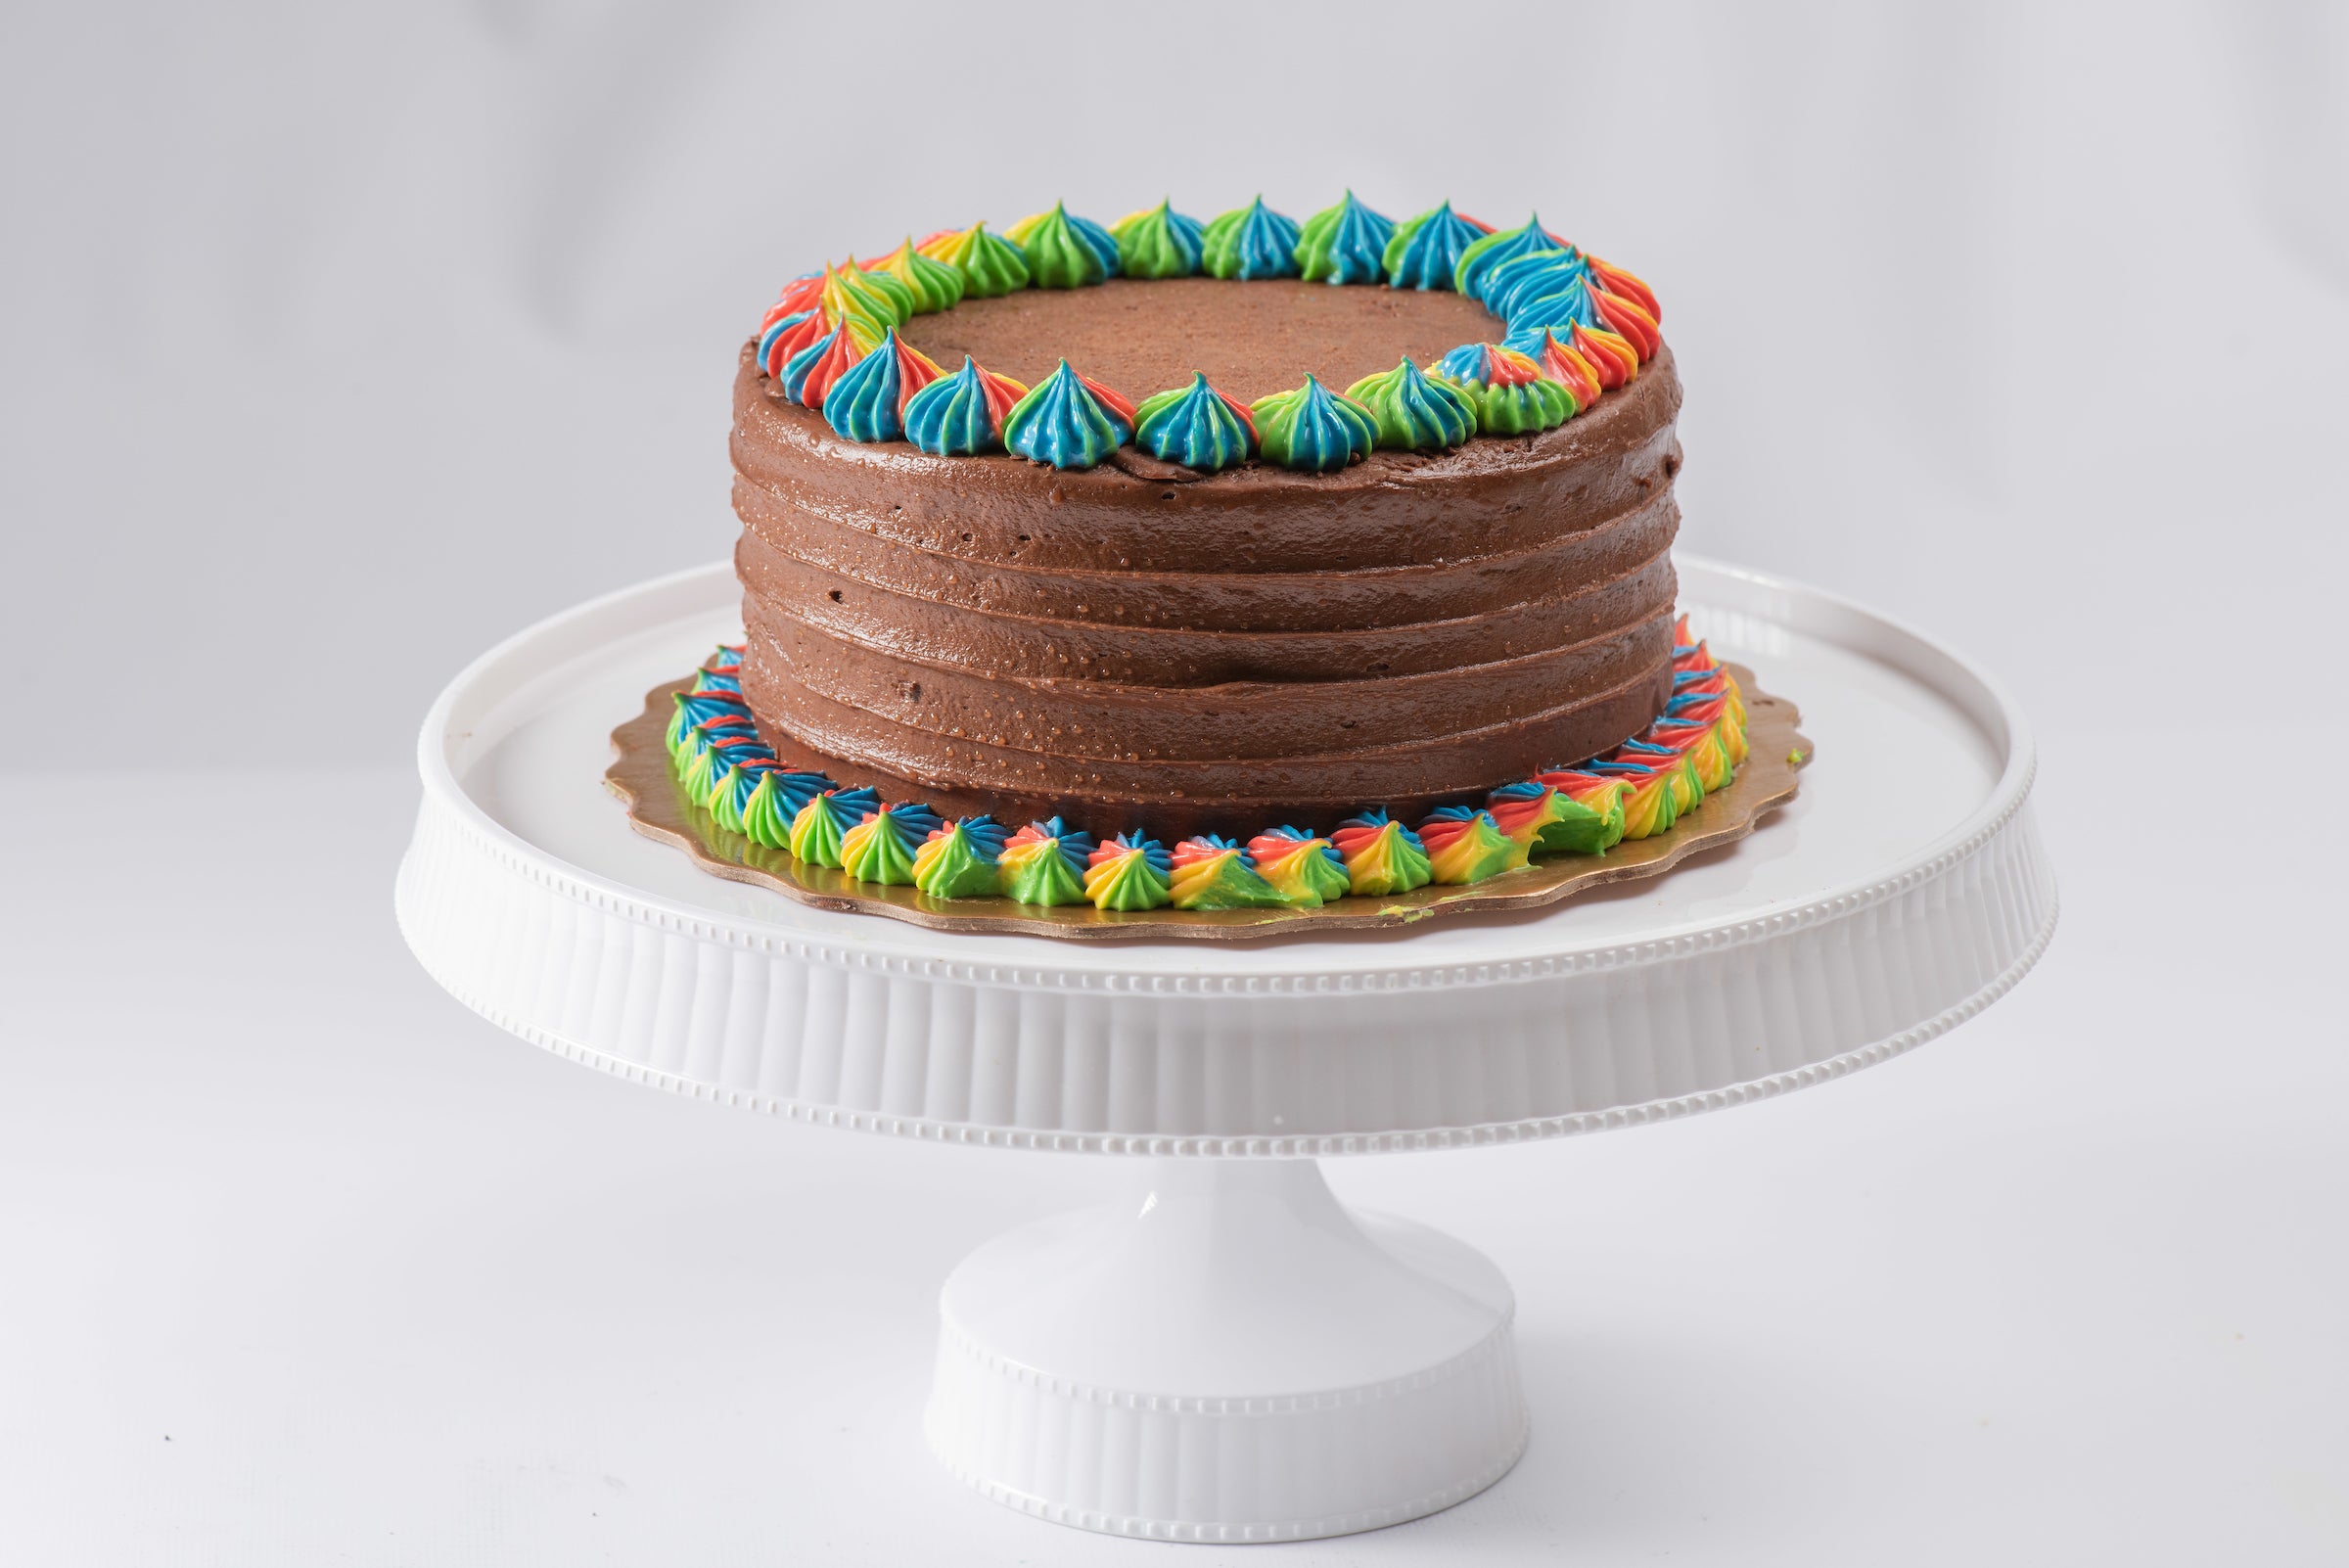 Vegan Chocolate Chocolate Cake with Rainbow Accent